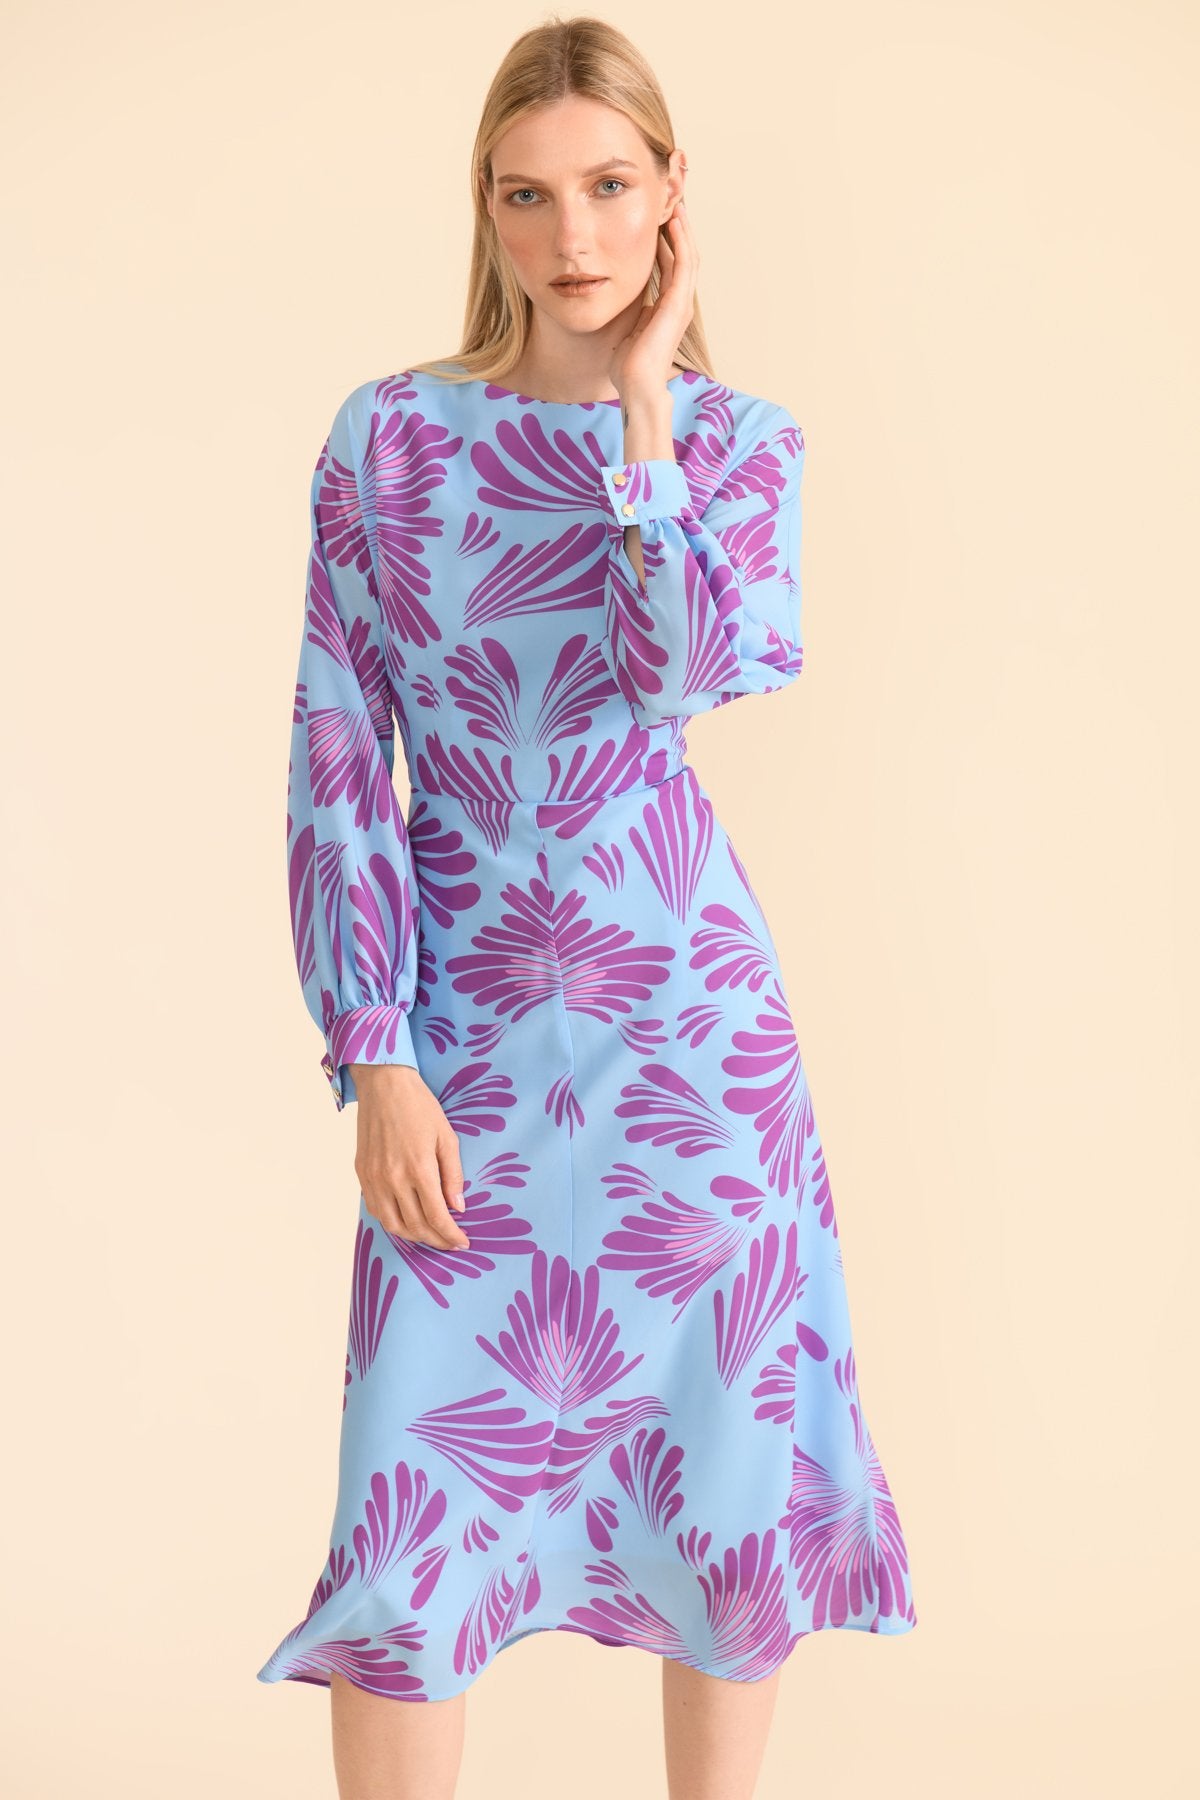 Caroline Kilkenny Iris Purple Flower Print Dress